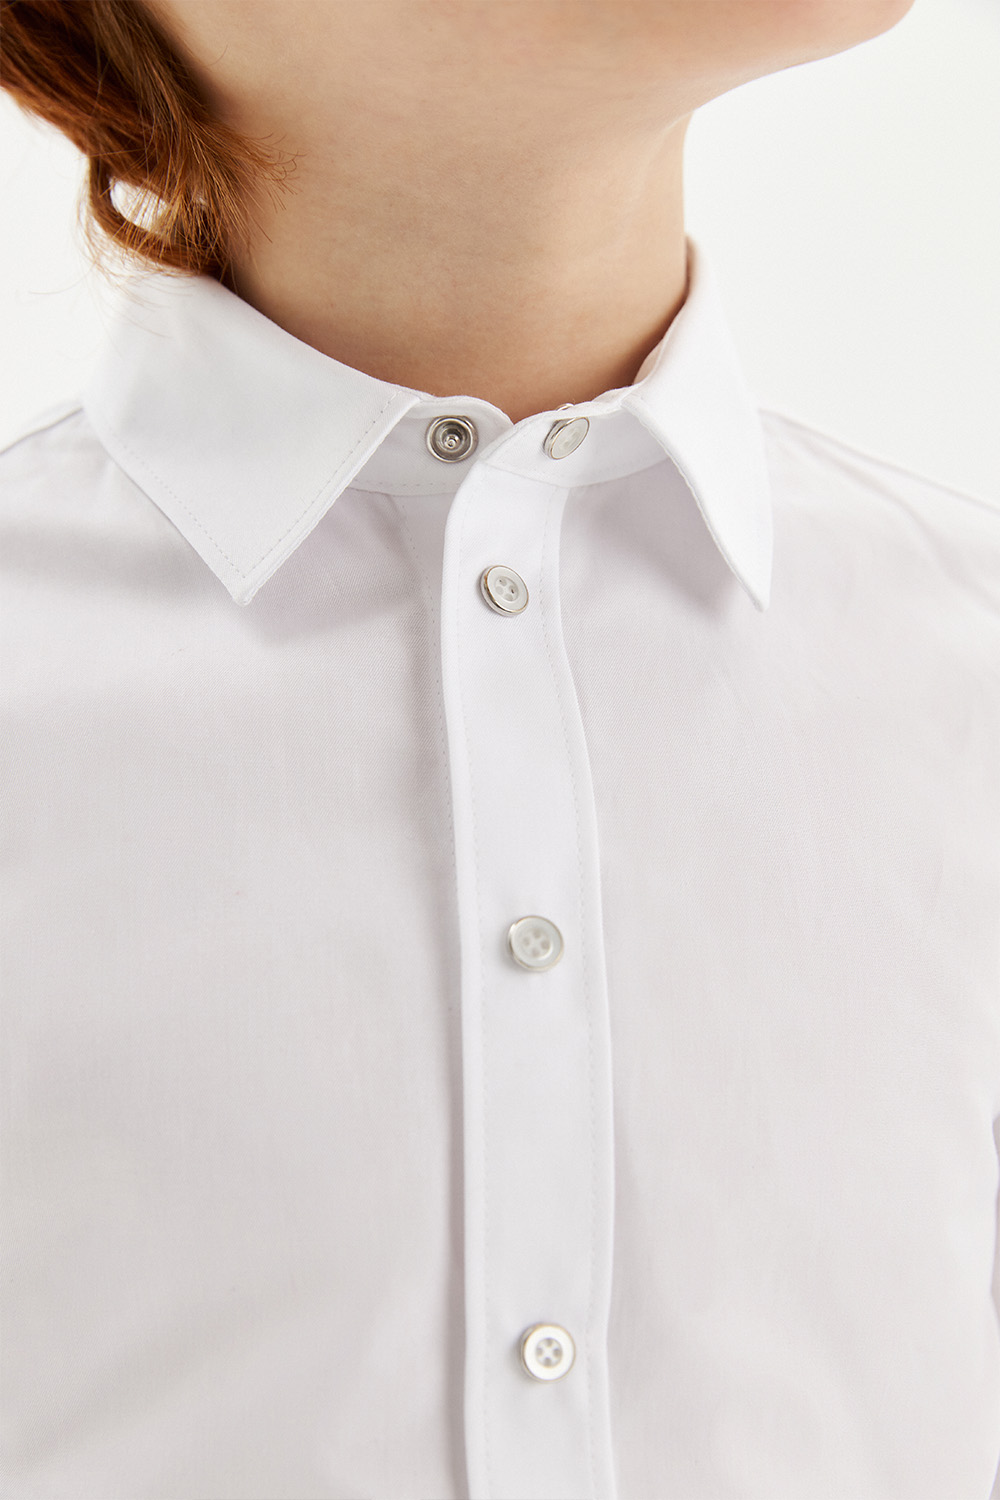 Сорочка с трикотажной спинкой Slim на кнопках (SSFSB-228-14153-200) Silver Spoon